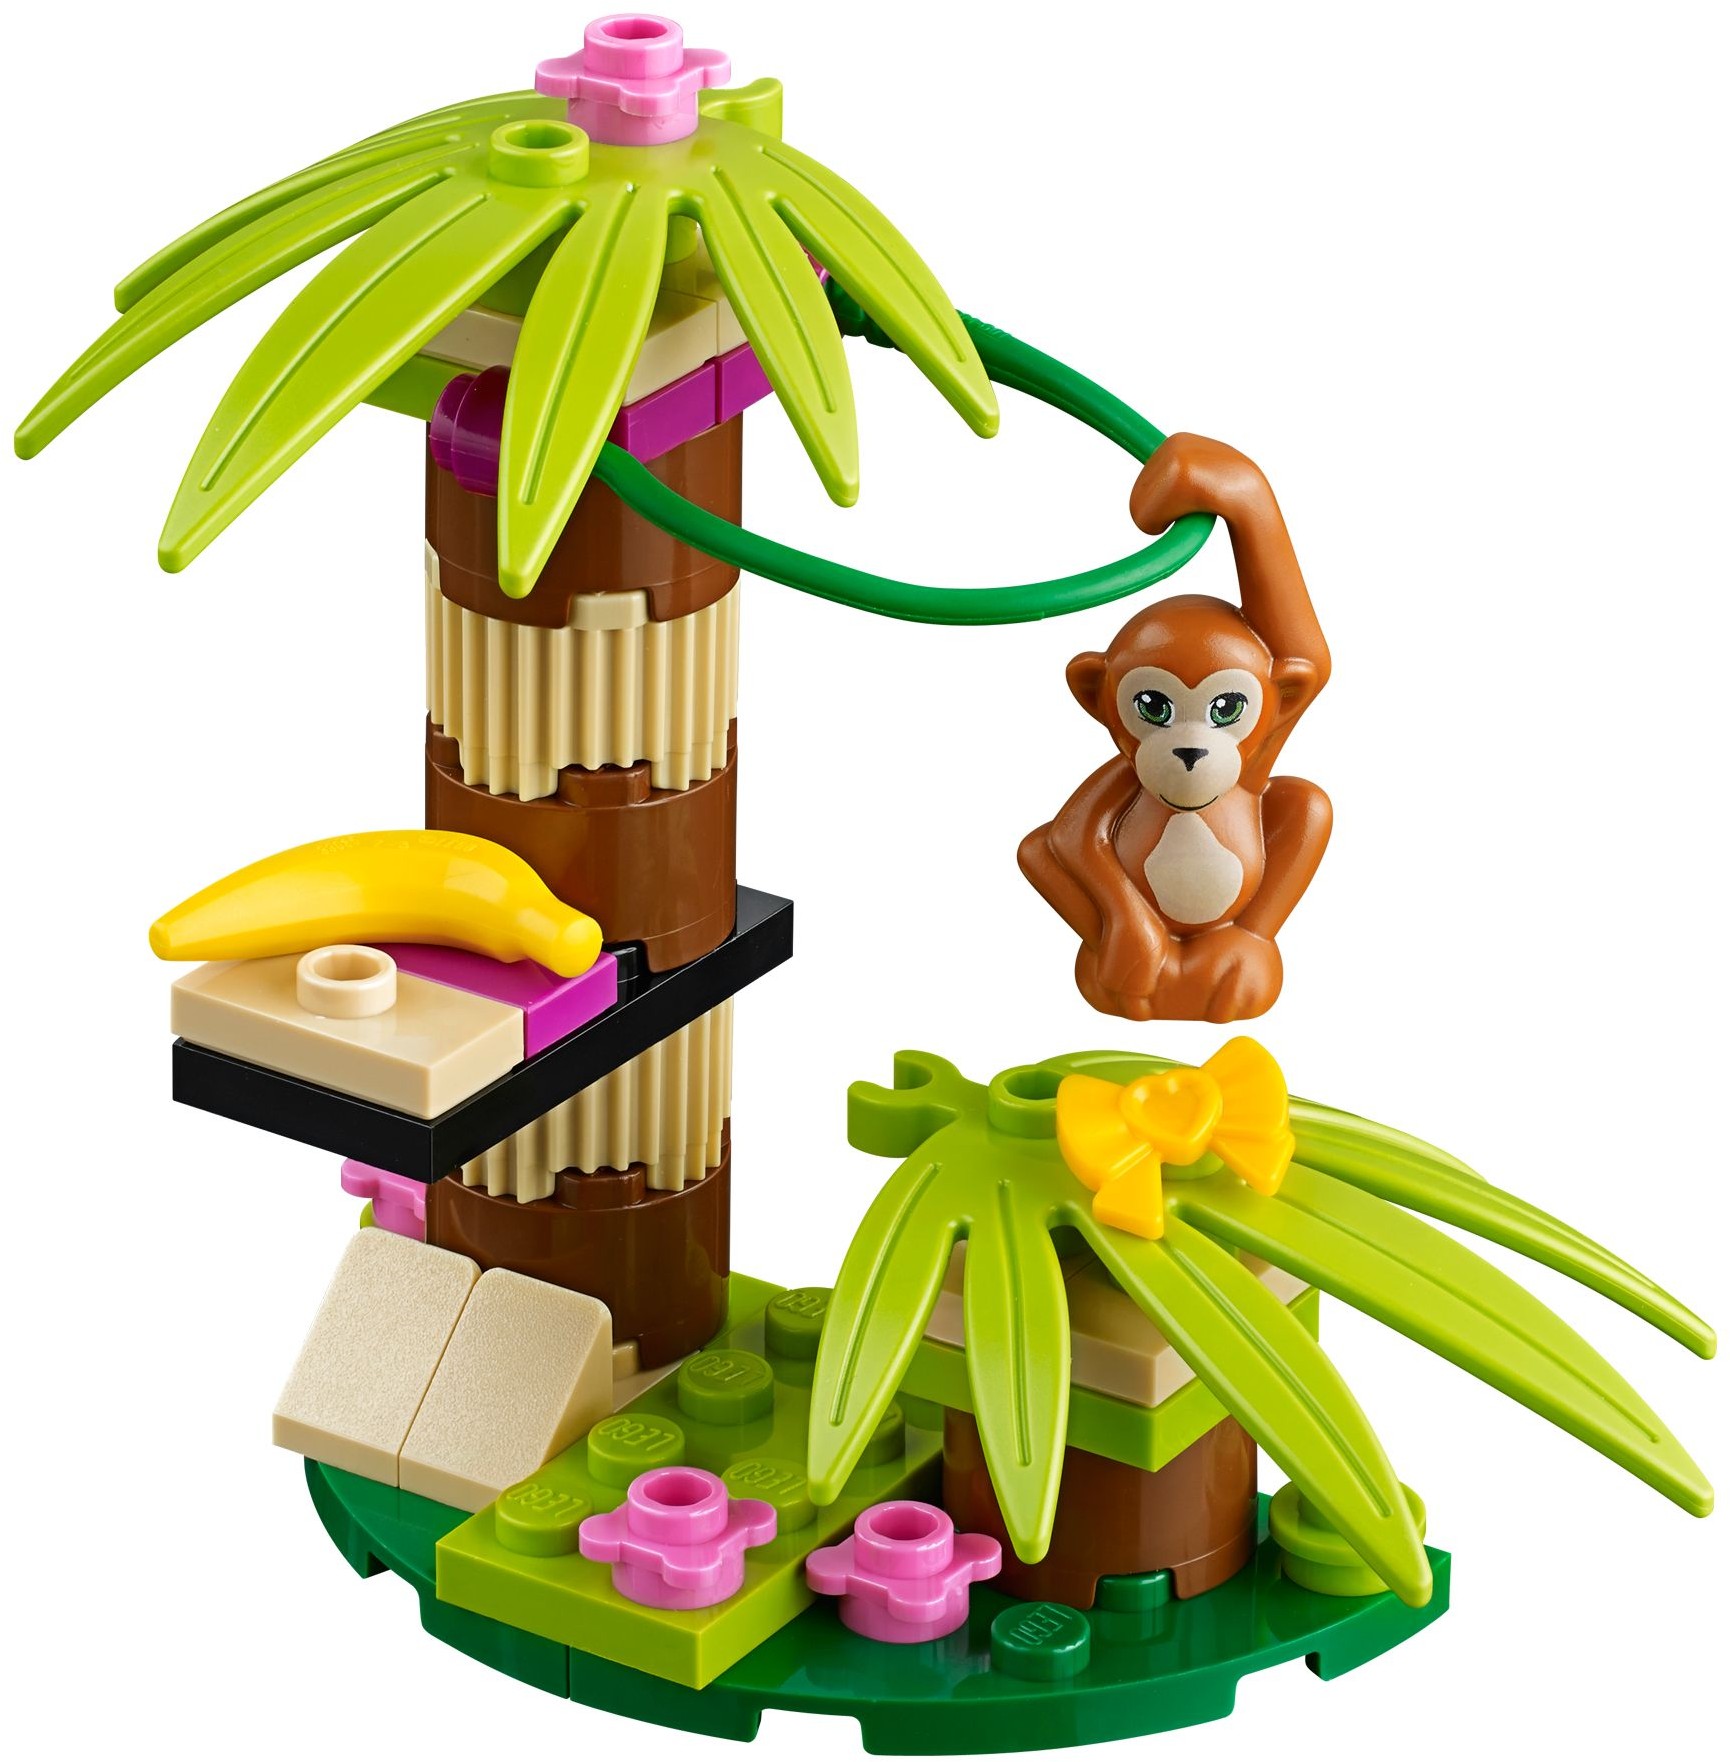 ☀️NEW Lego Friends Animal Pet Monkey with Banana from Indiana Jones